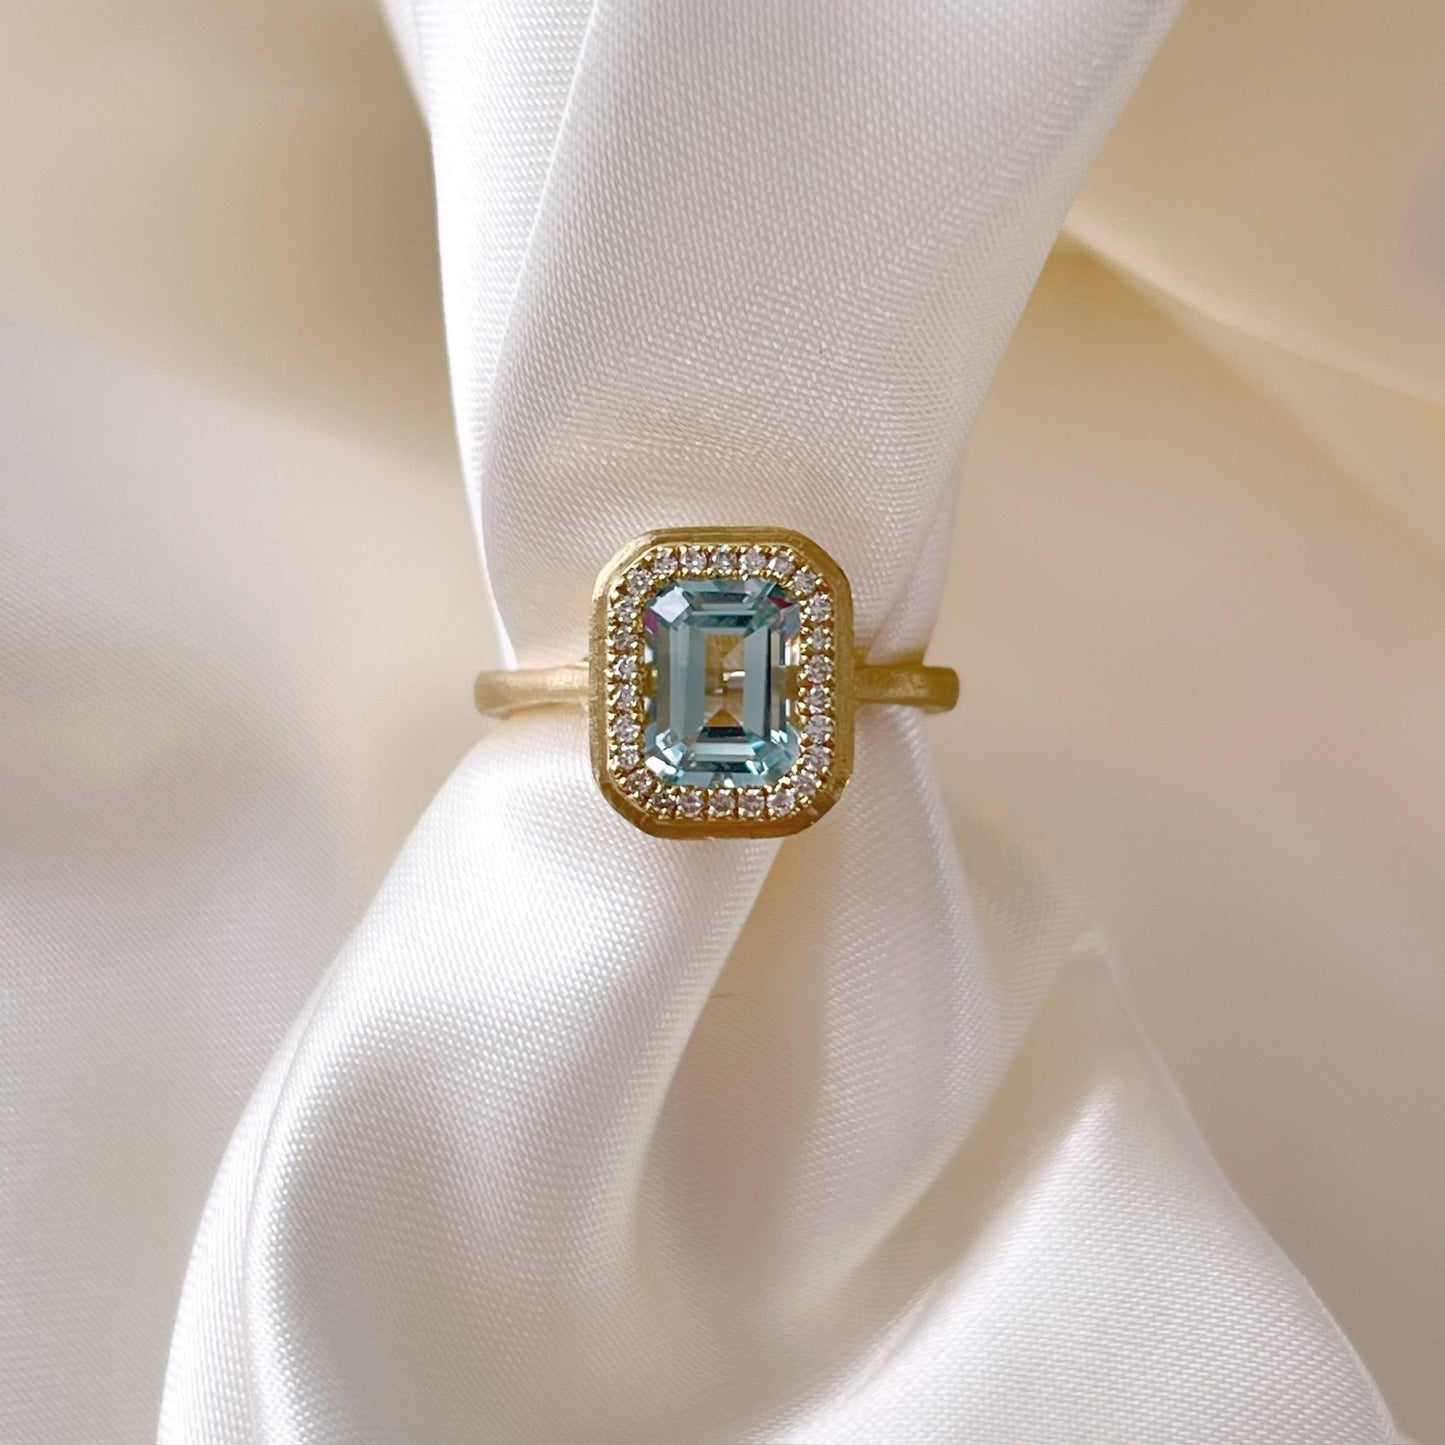 Emerald Cut Sky Blue Topaz and Diamond Halo Ring